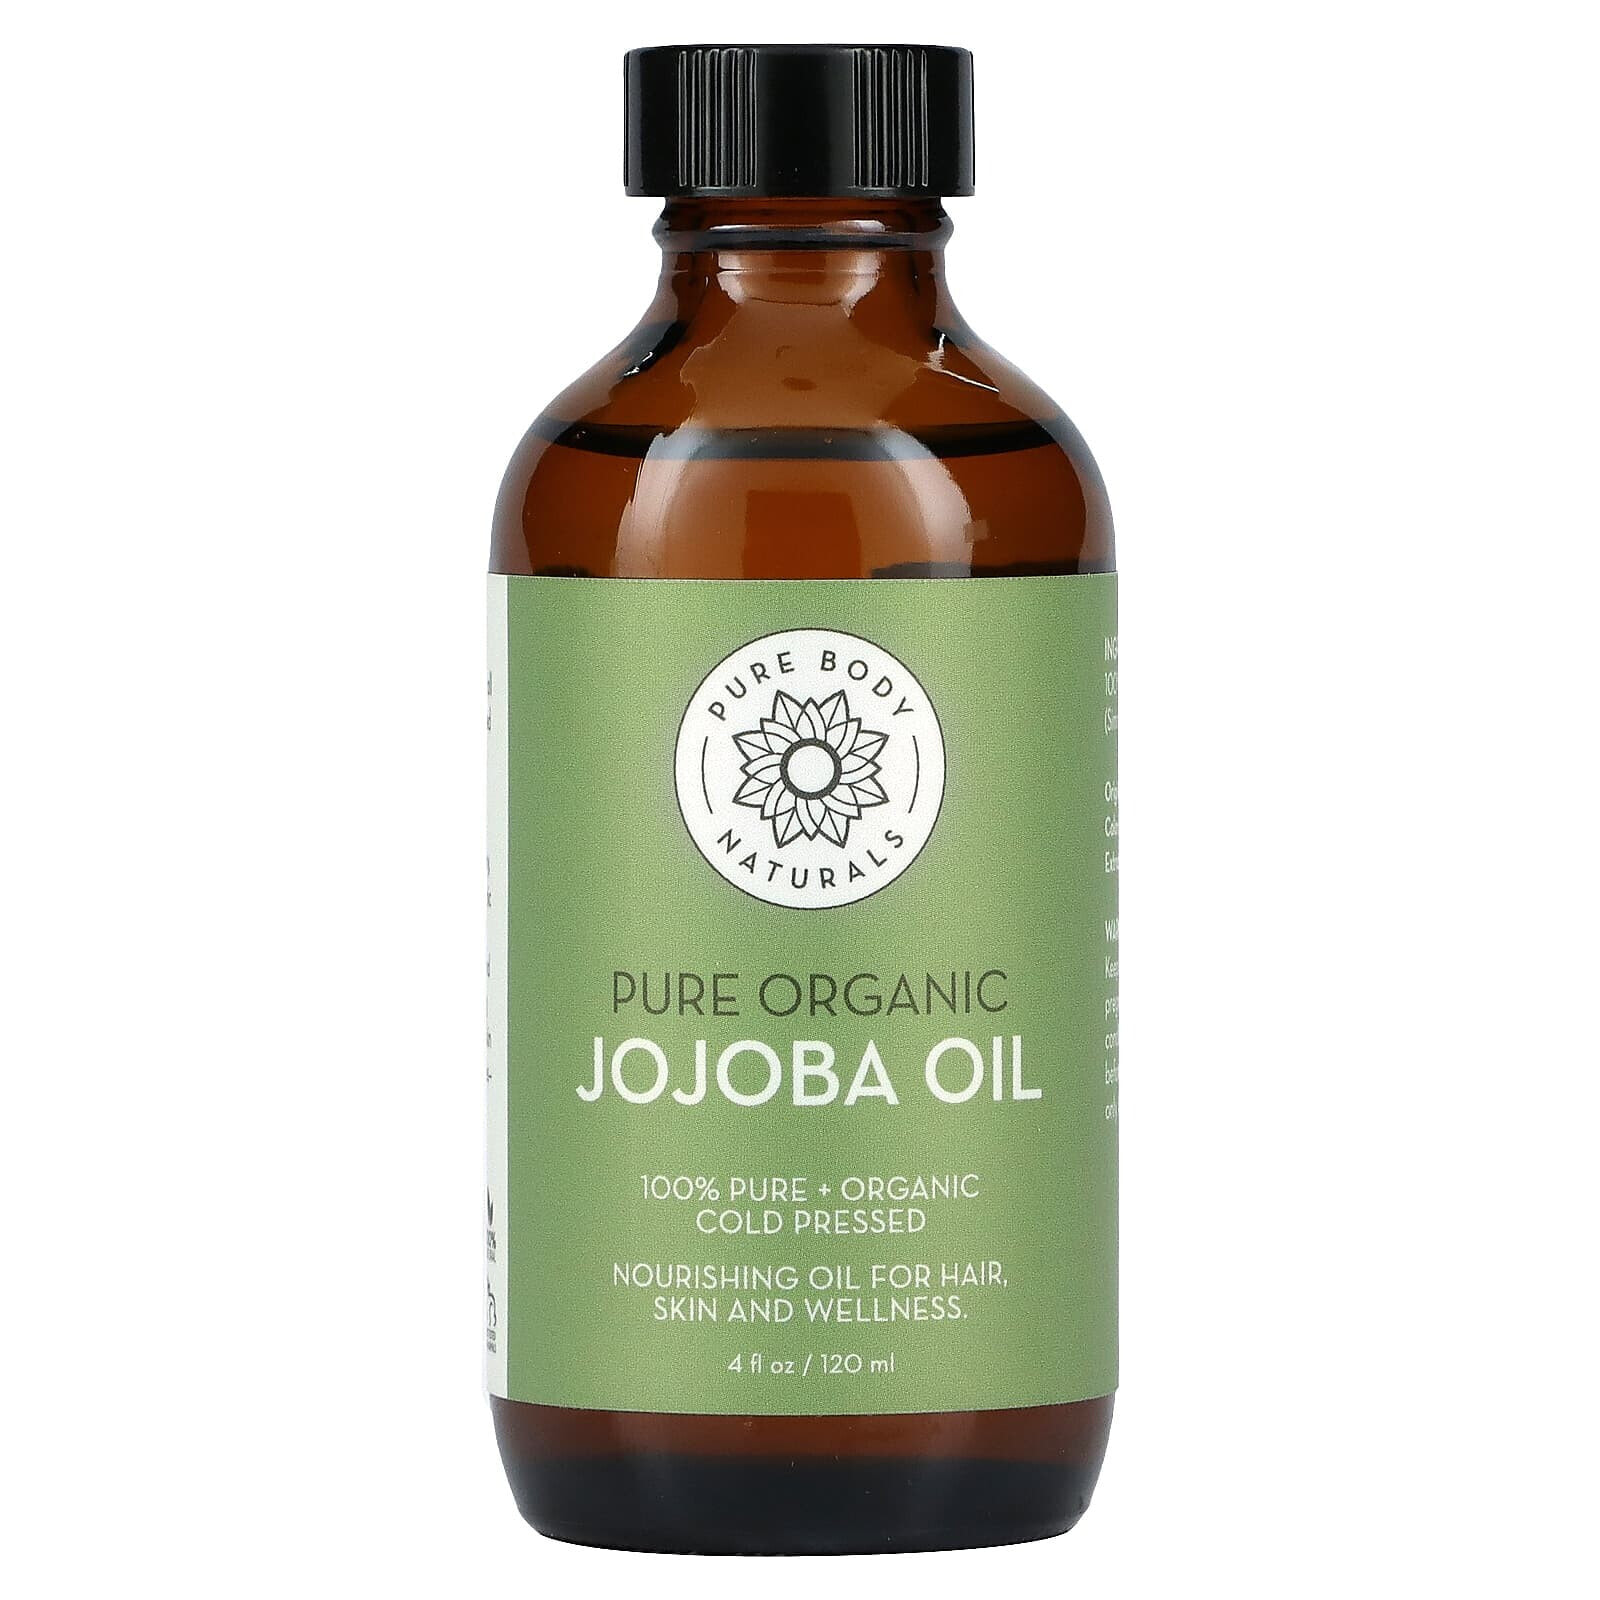 Pure Body Naturals Pure Organic Jojoba Oil Натуральное масло жожоба 120 мл